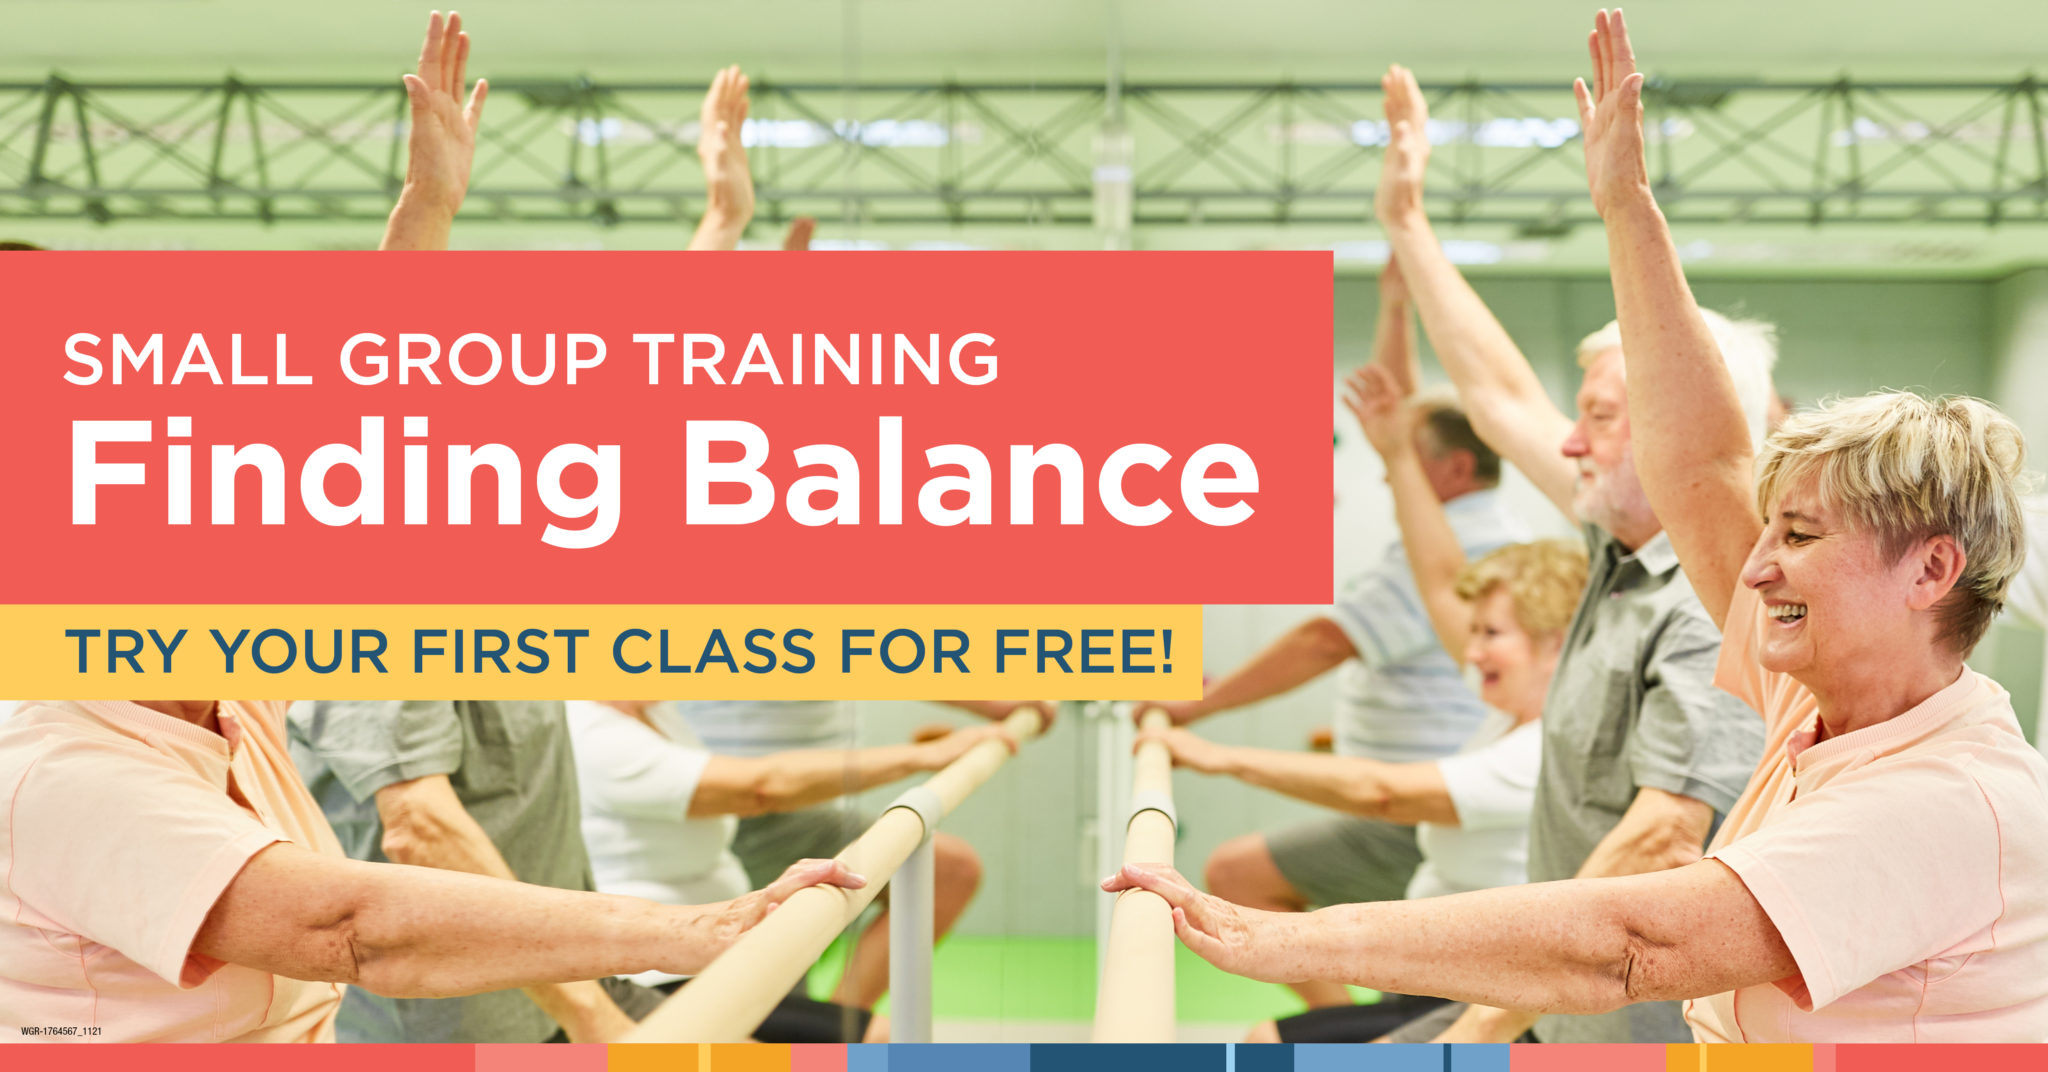 Small Group Training Finding Balance